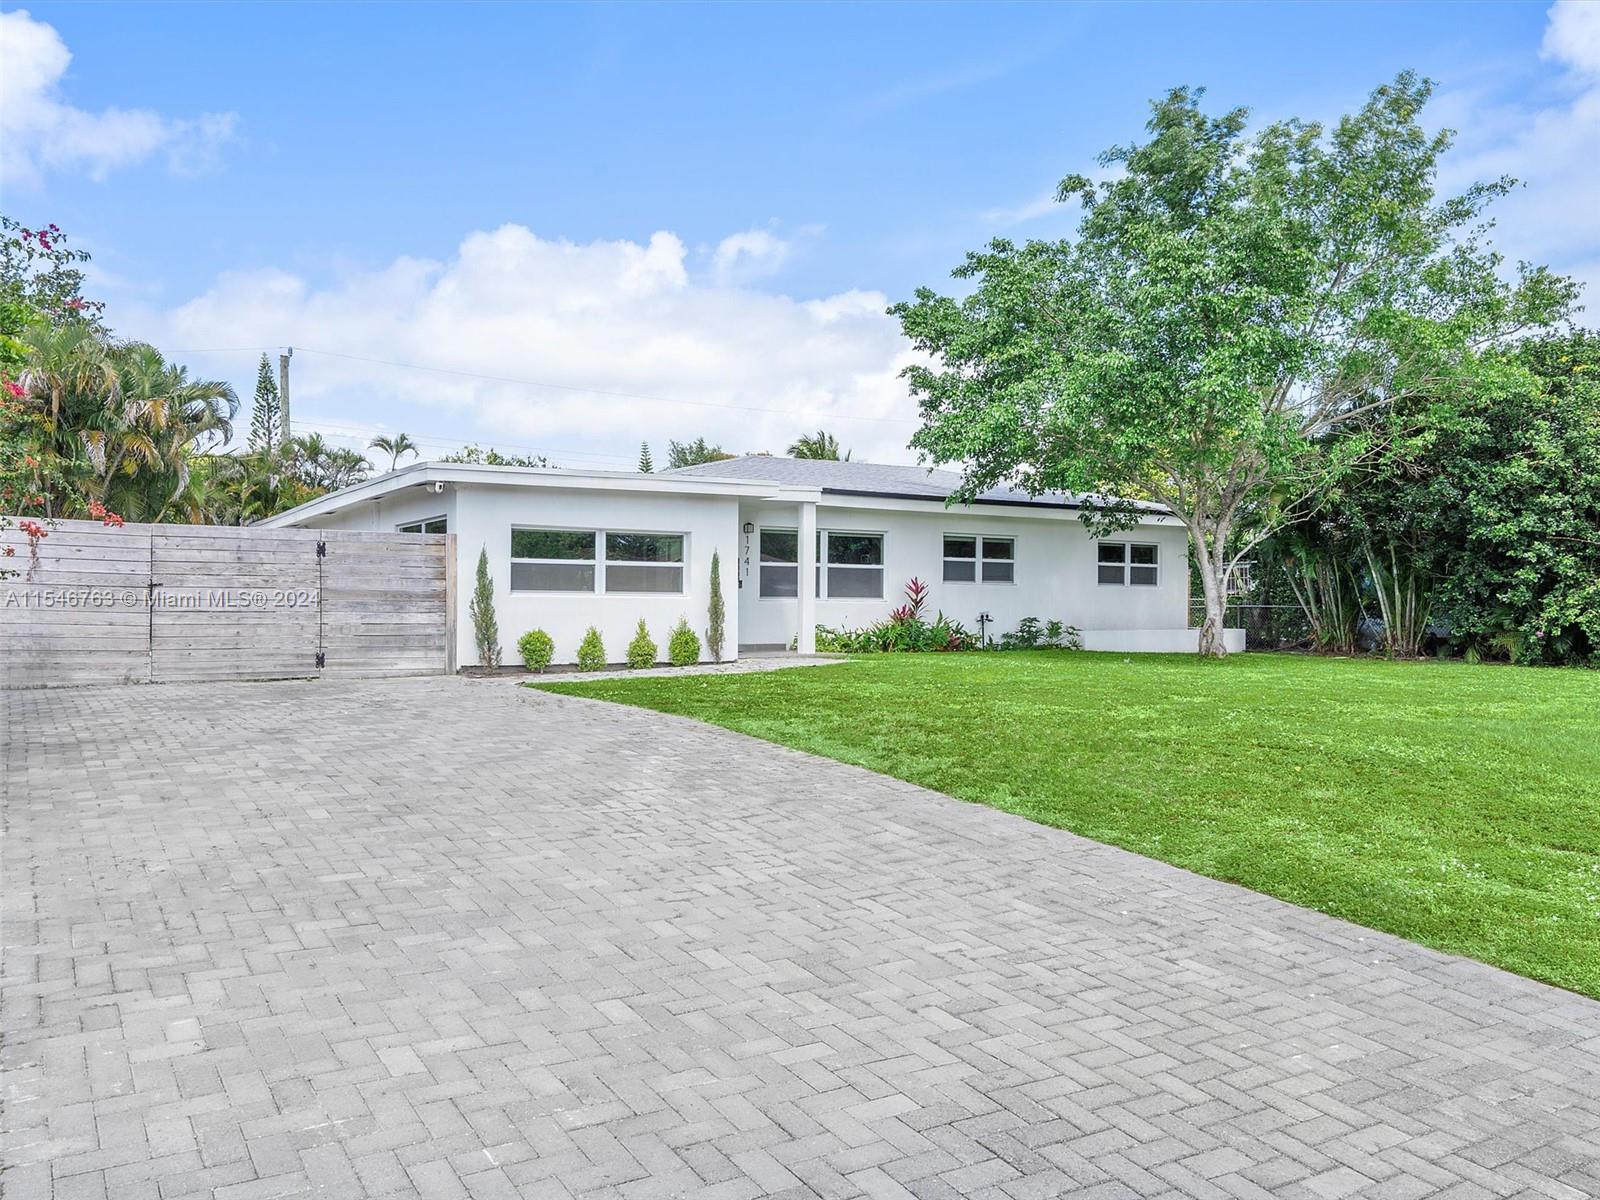 Property for Sale at 1741 Ne 170th St, North Miami Beach, Miami-Dade County, Florida - Bedrooms: 3 
Bathrooms: 2  - $865,000